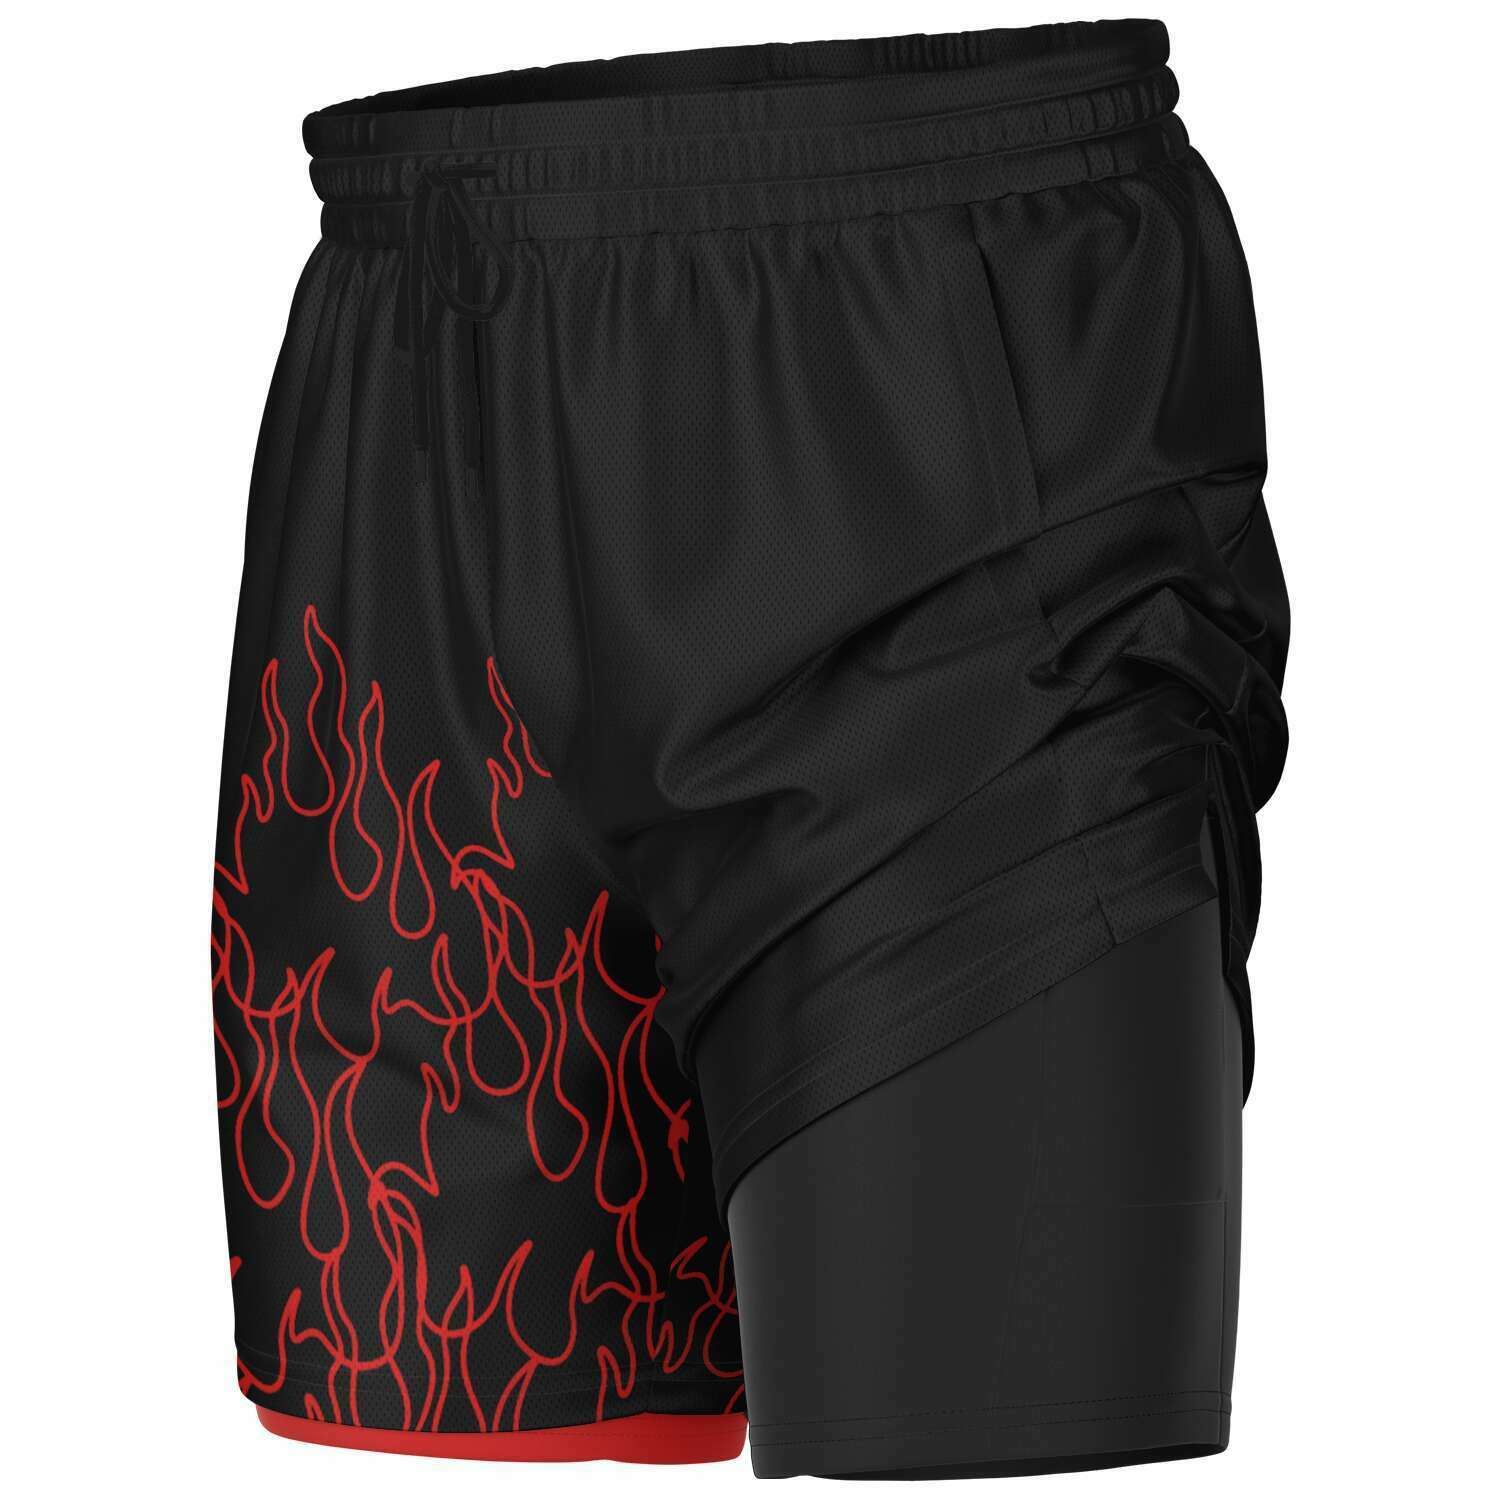 Red Pinstripe Shorts